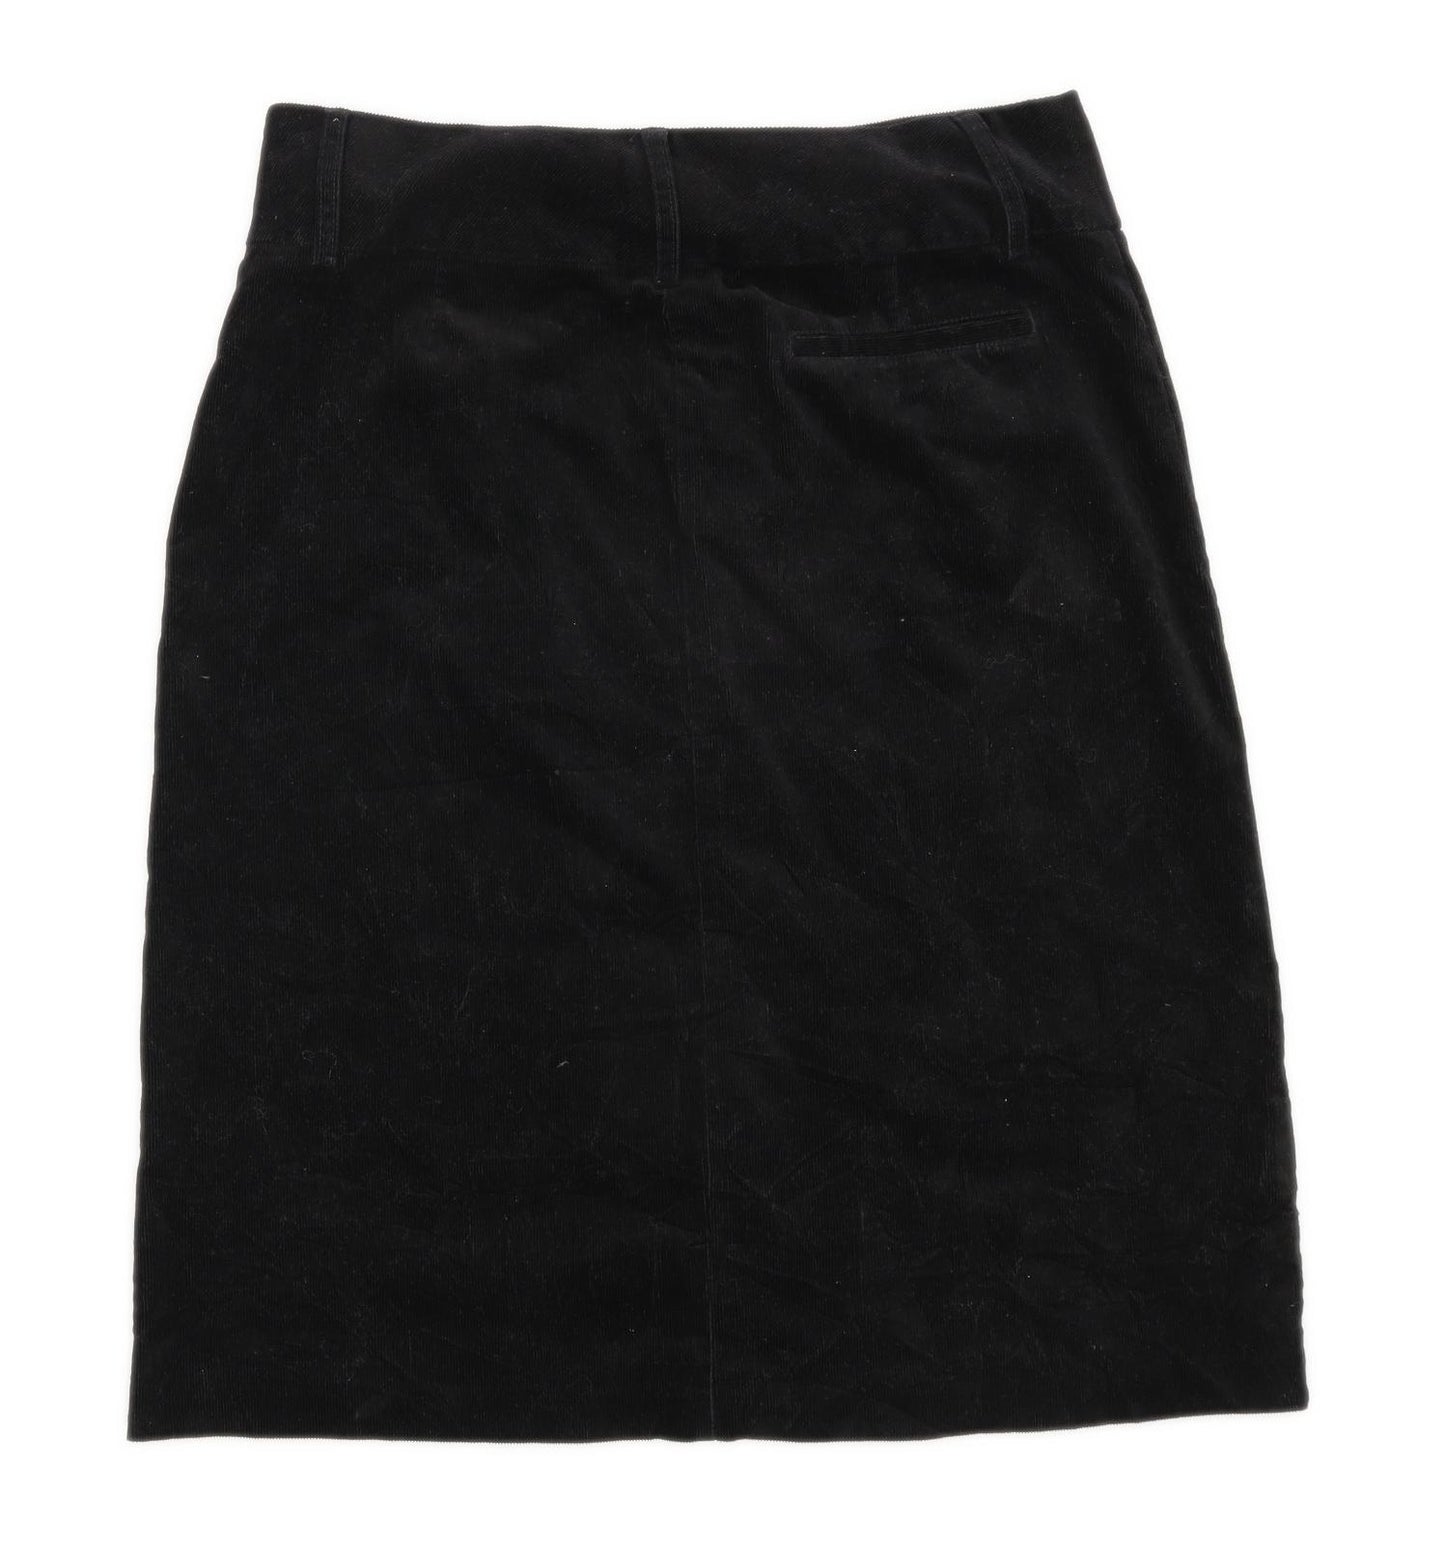 Next Womens Size 12 Corduroy Blend Black Skirt (Regular)